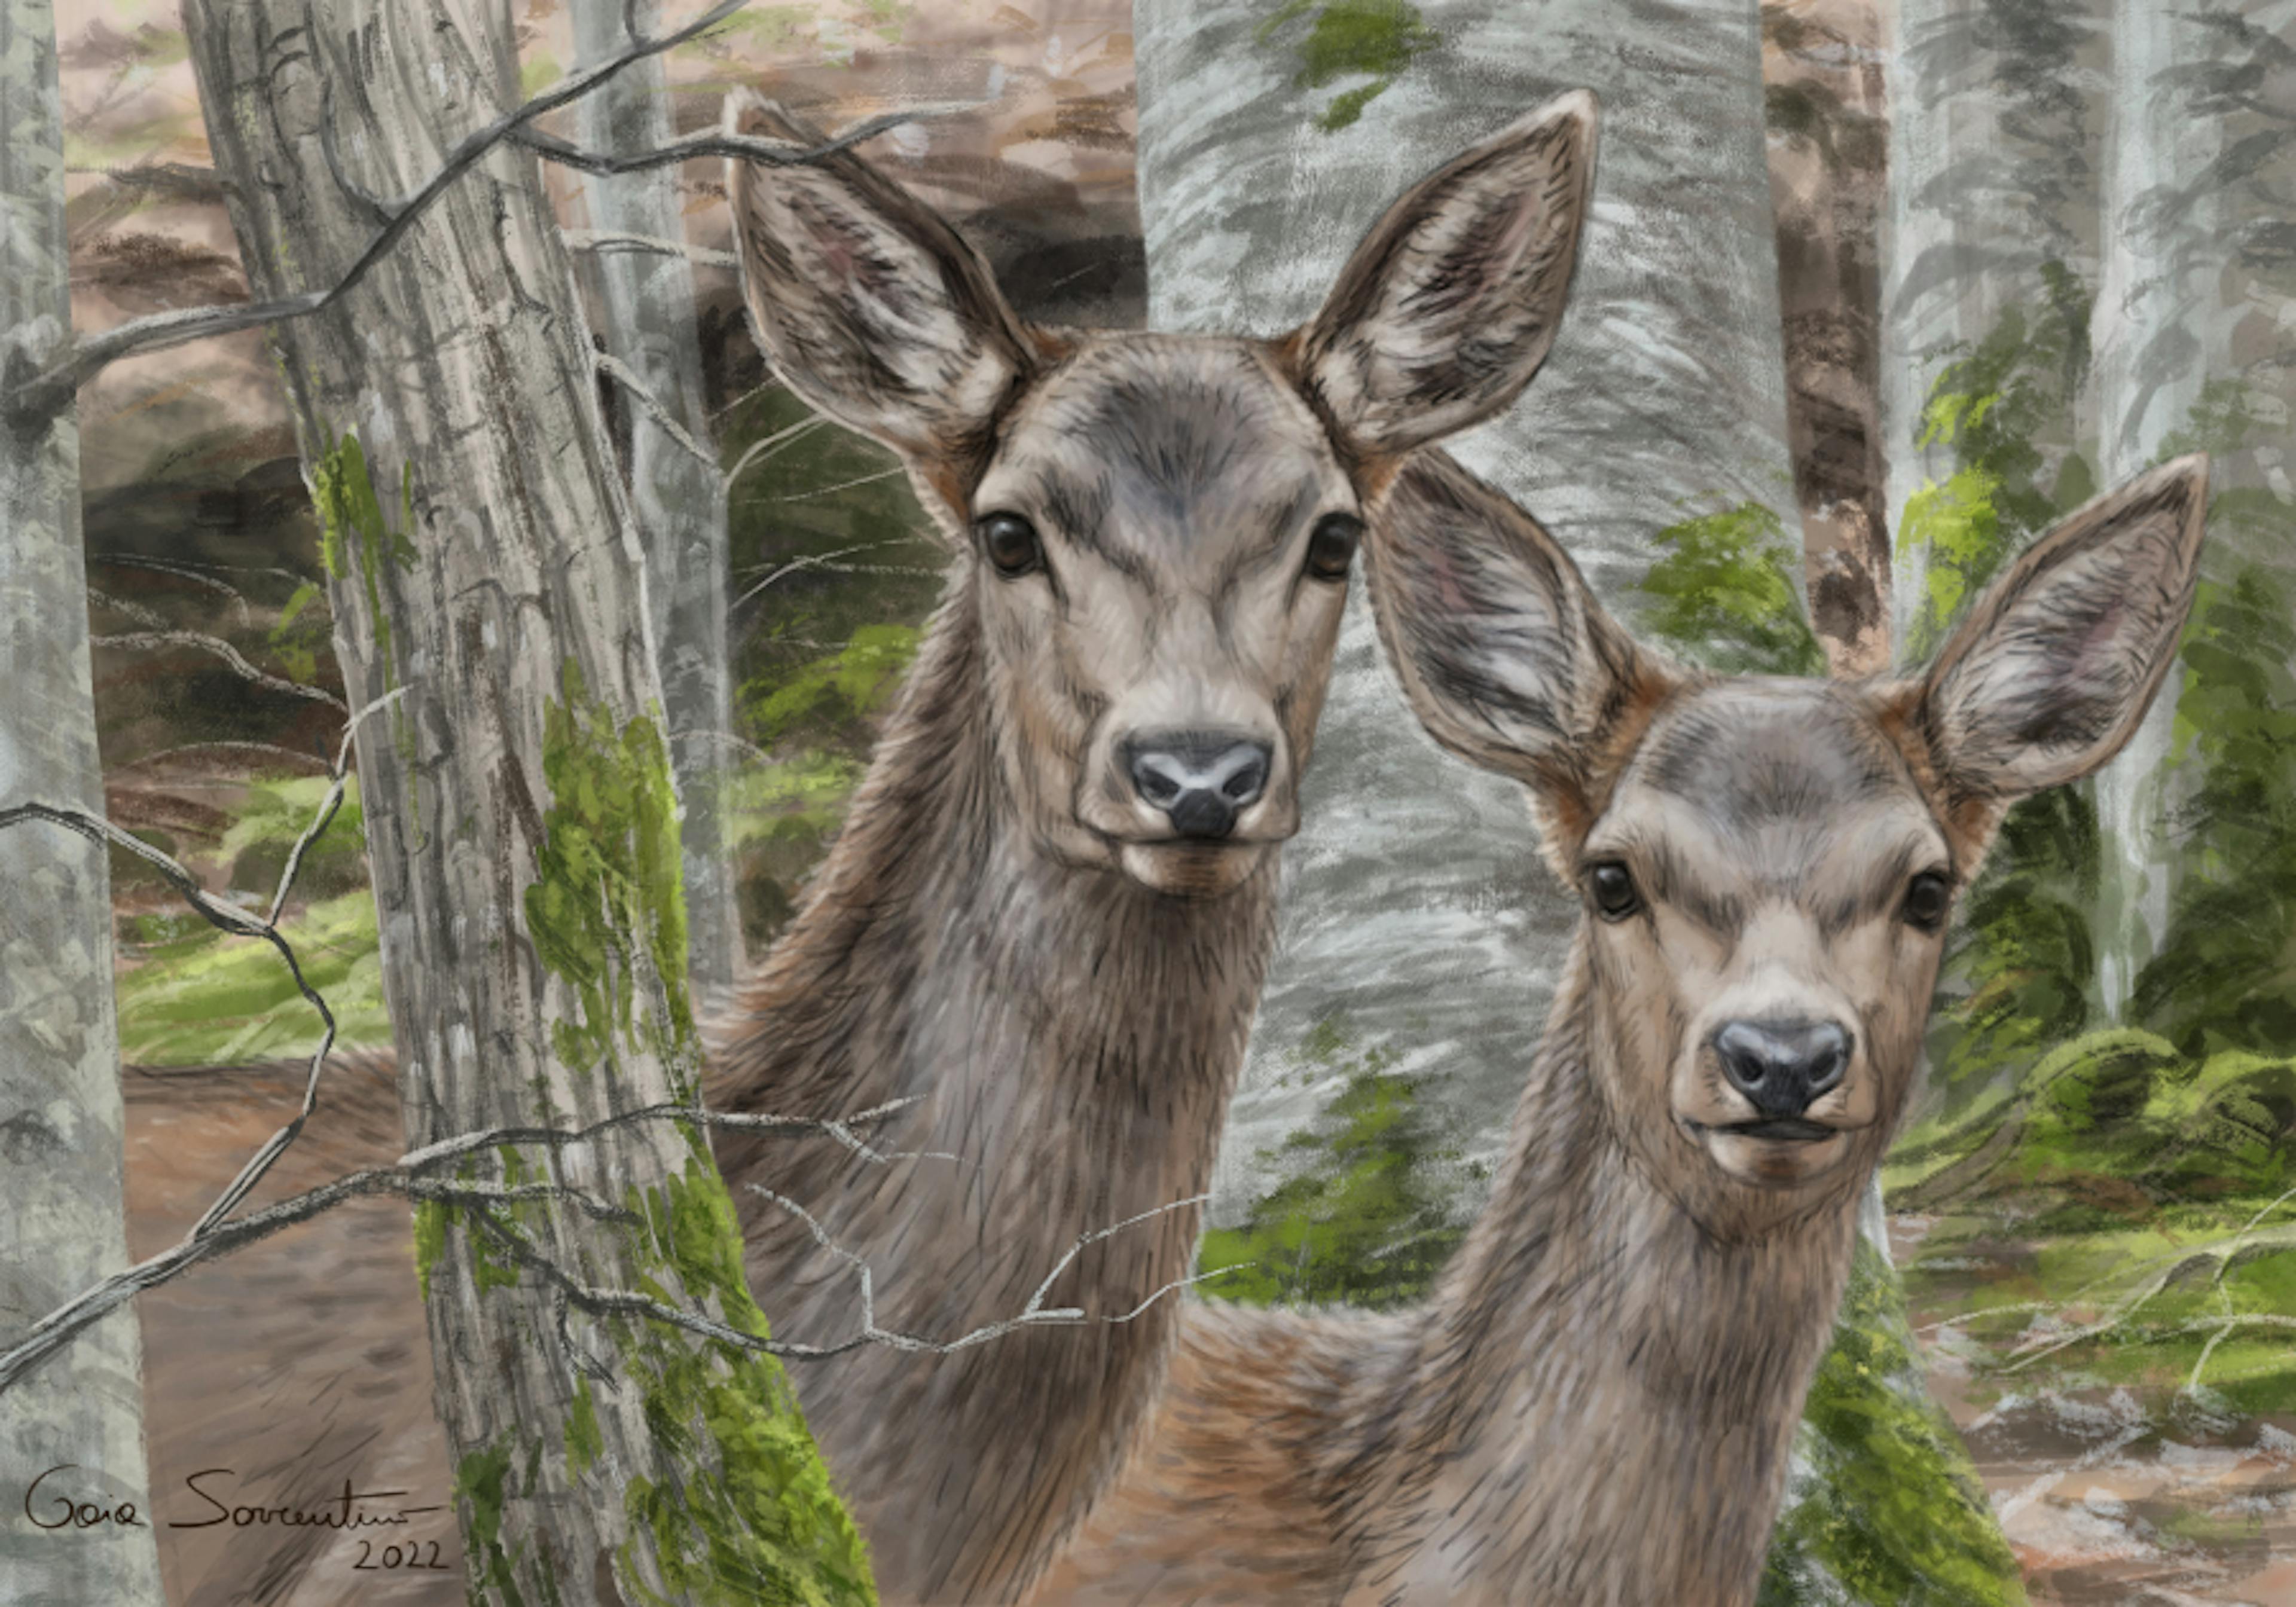 Two deer looking at camera